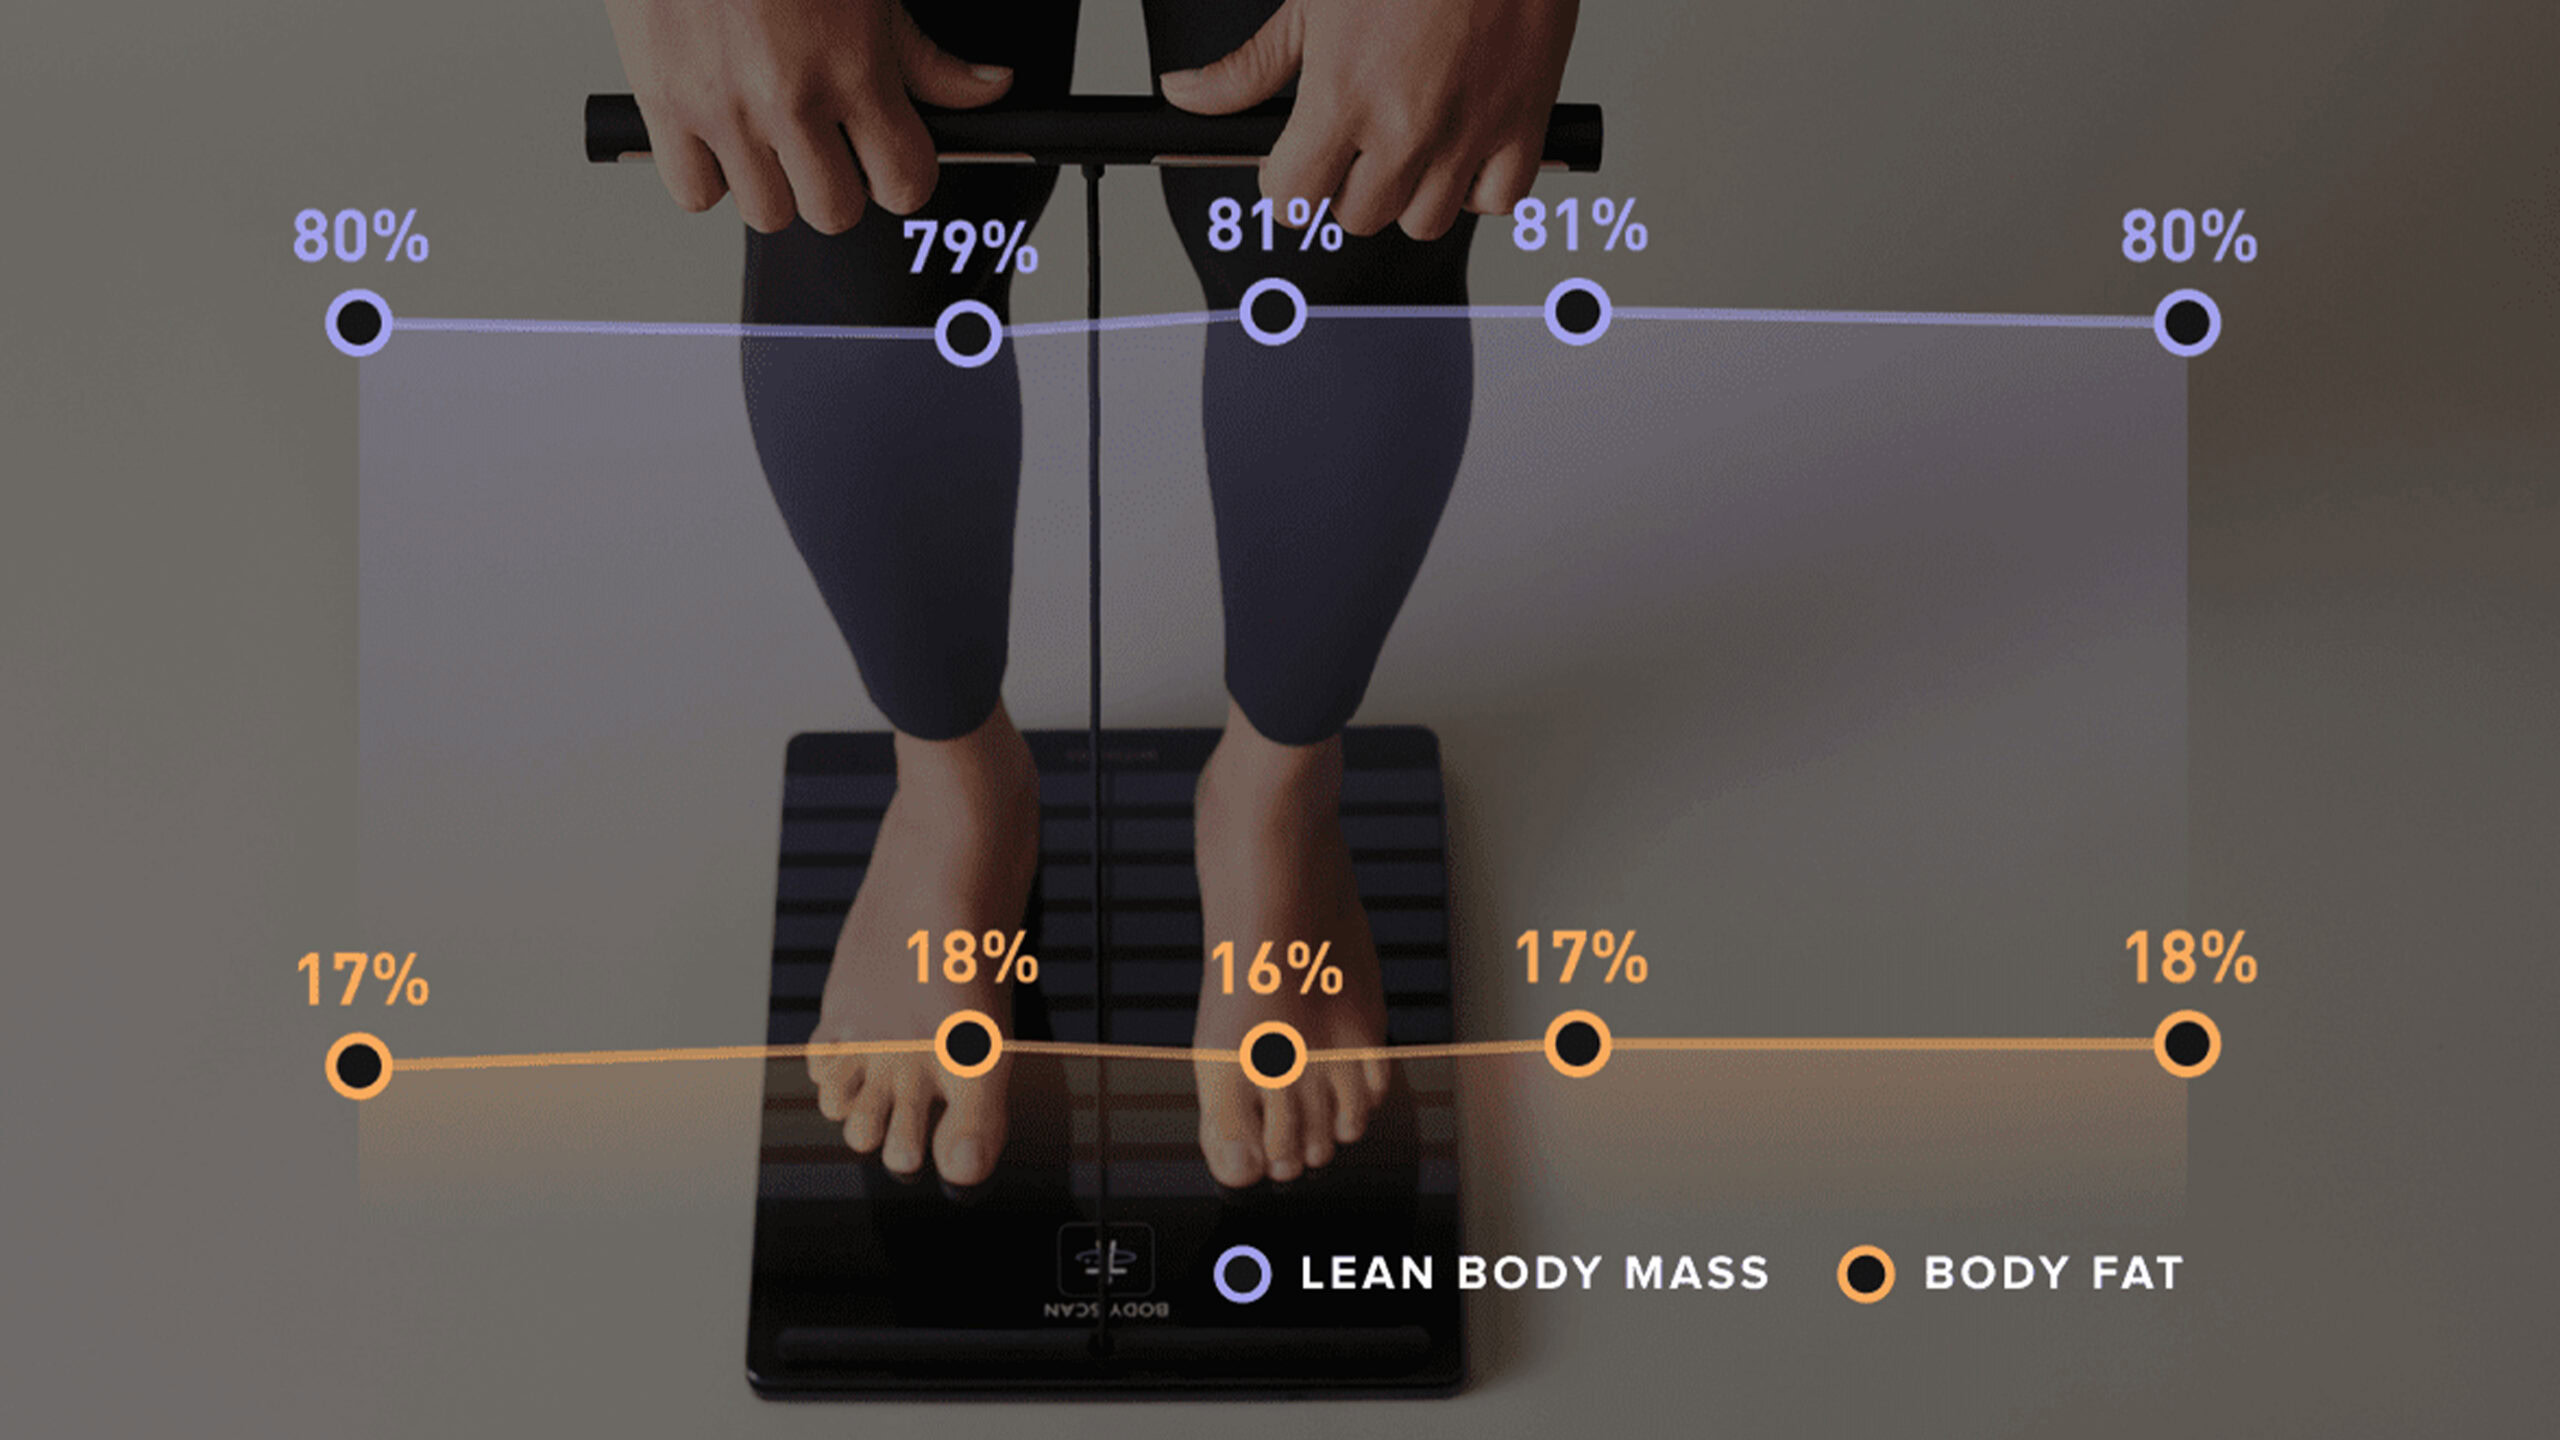 Whoop Lean Body Mass Body Fat Trends